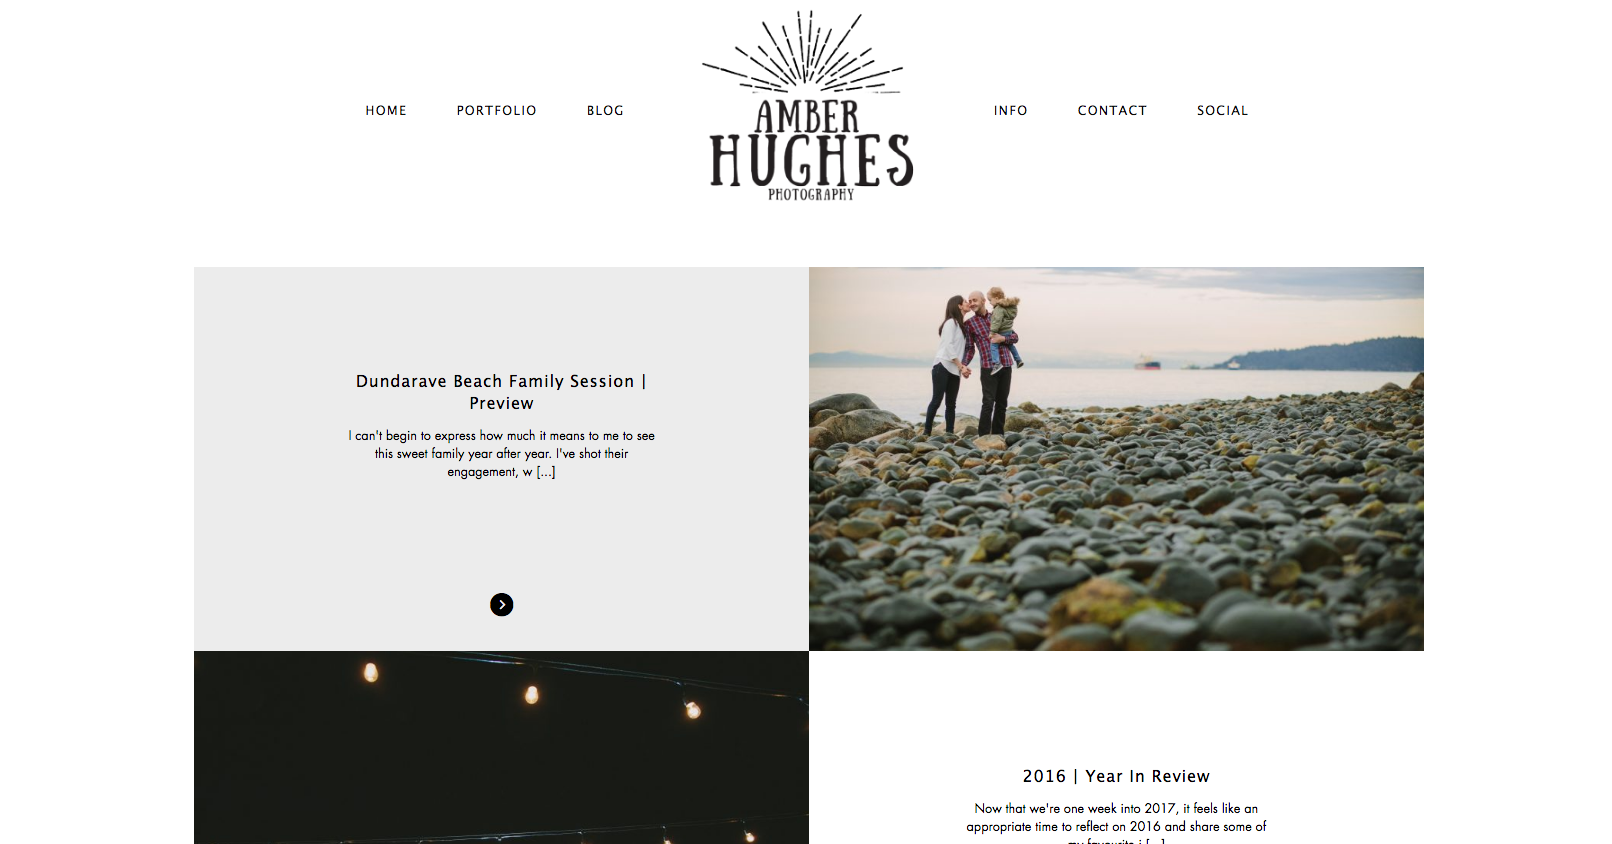 Vancouver Wedding Photographer Amber Hughes Website